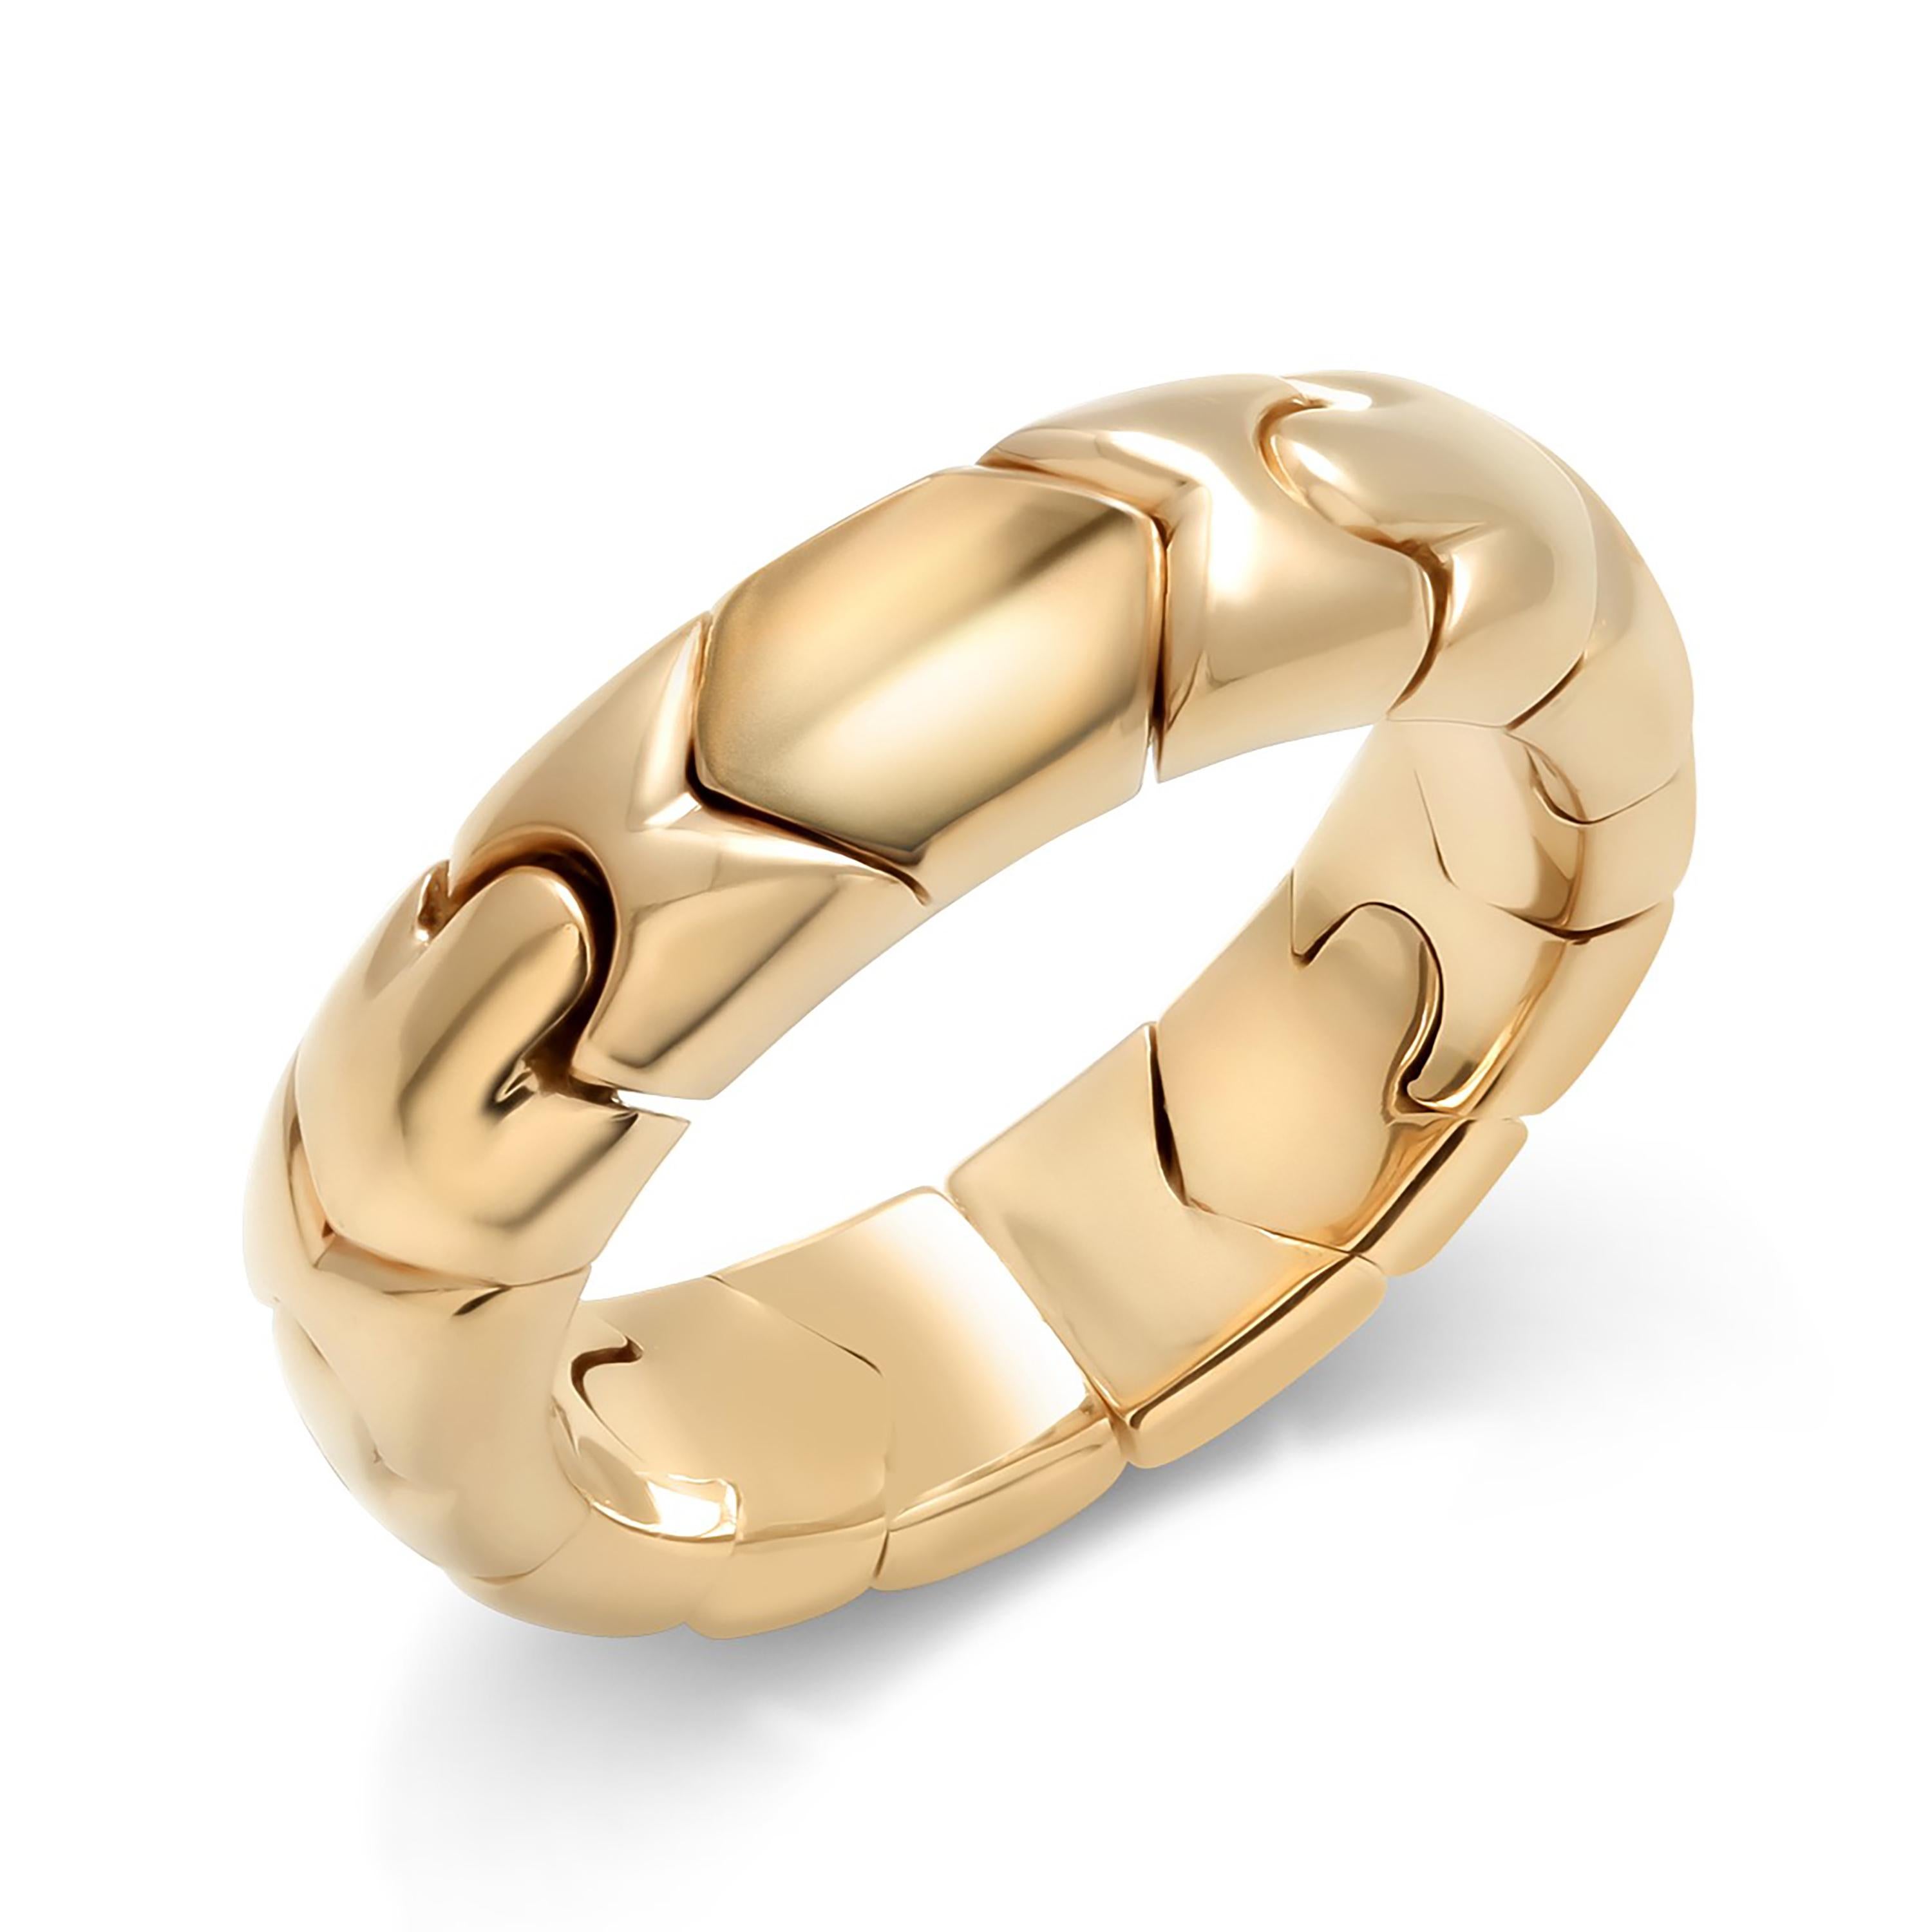 Bvlgari Passo Doppio Collection 18 Karat Gold Band Ring Finger Size 9 For Sale 2